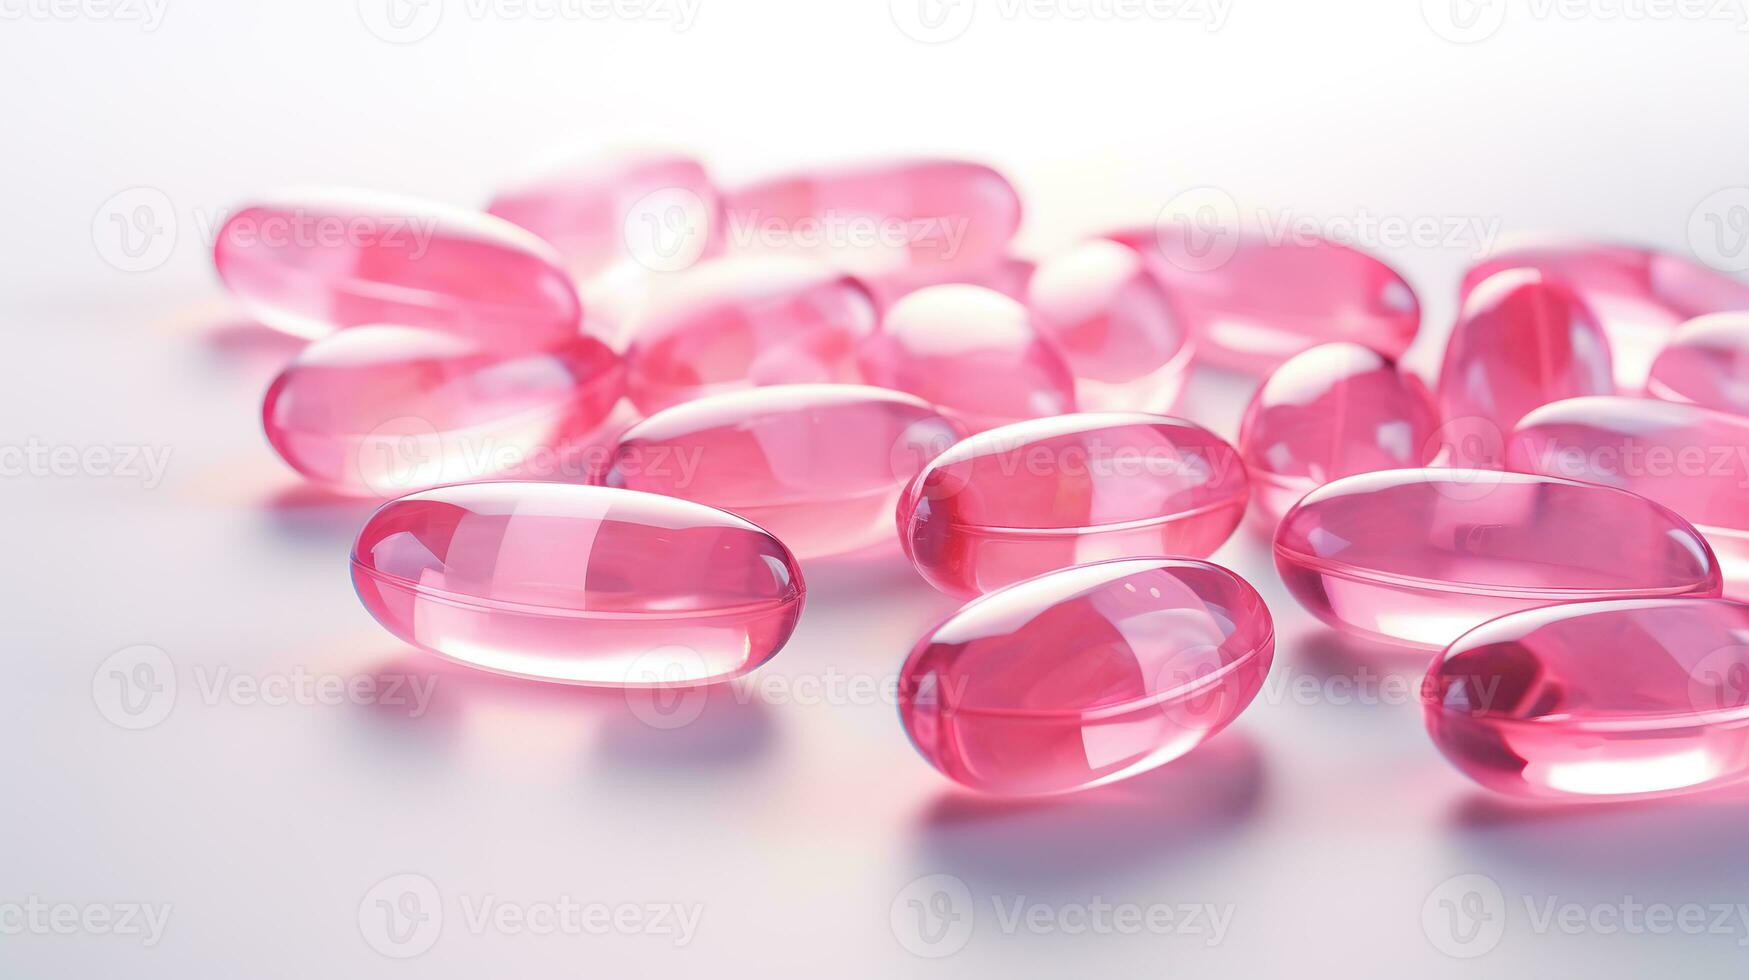 rosa transparent vitaminer på en ljus bakgrund foto